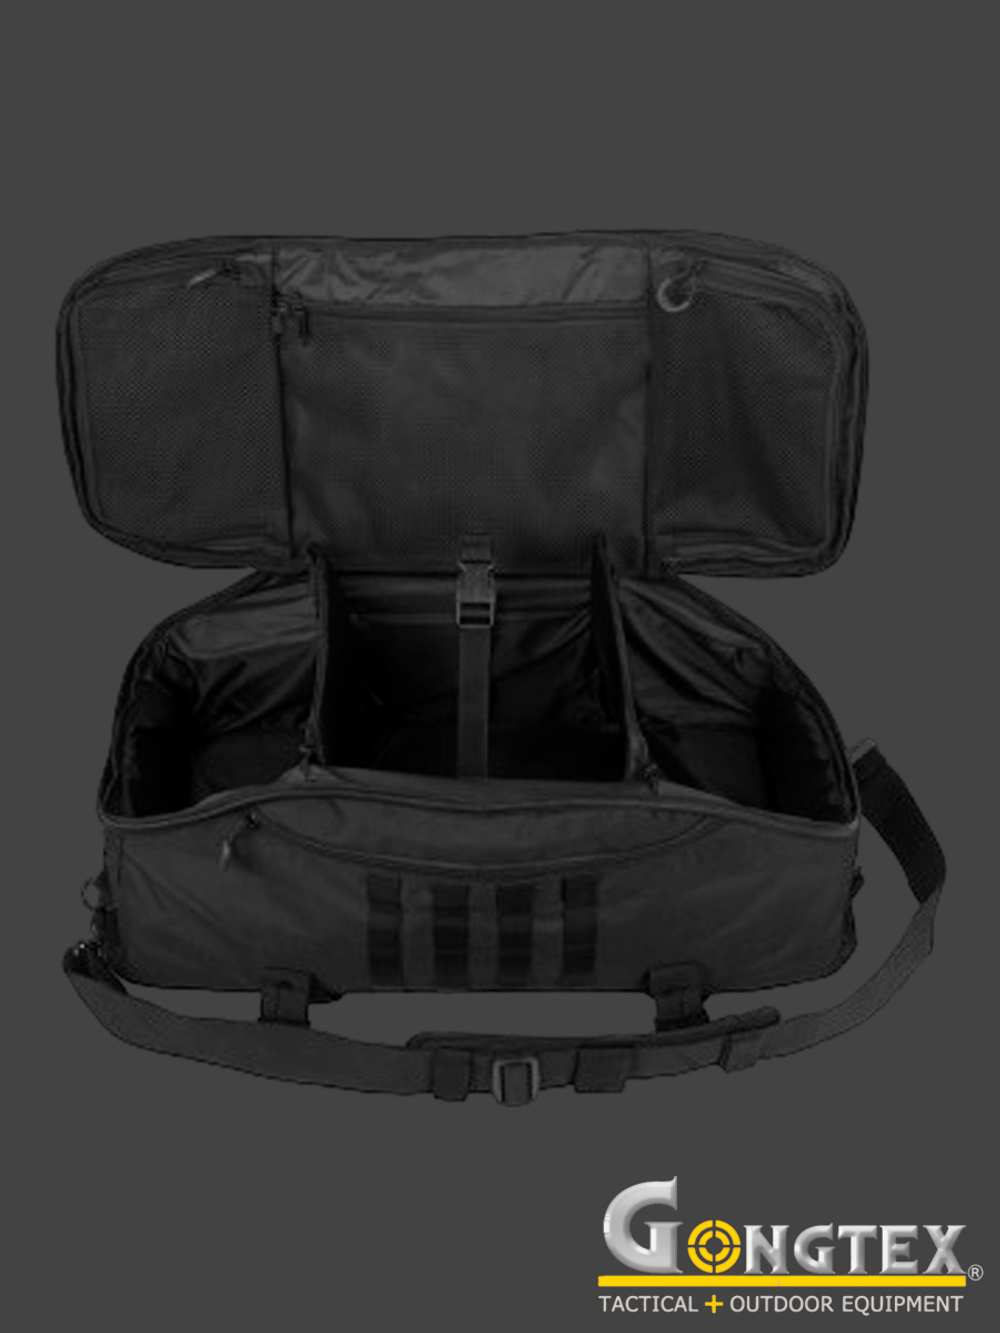 Баул Gongtex Traveller Duffle Backpack, 55 л (0308). Чёрный